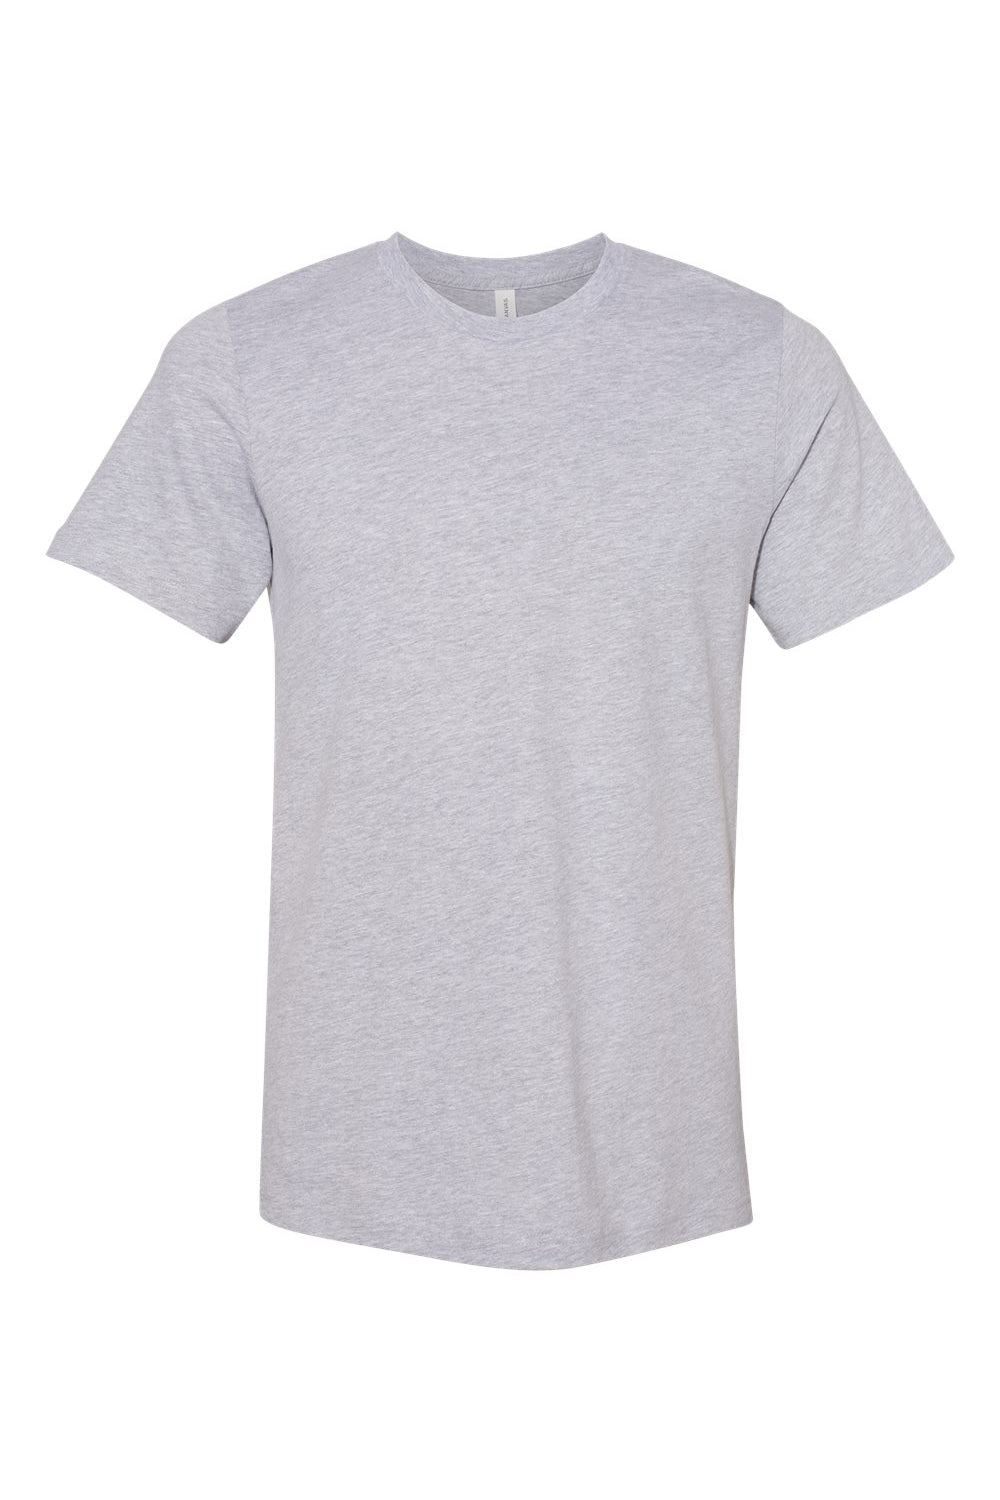 Bella + Canvas BC3301/3301C/3301 Mens Jersey Short Sleeve Crewneck T-Shirt Heather Grey Flat Front